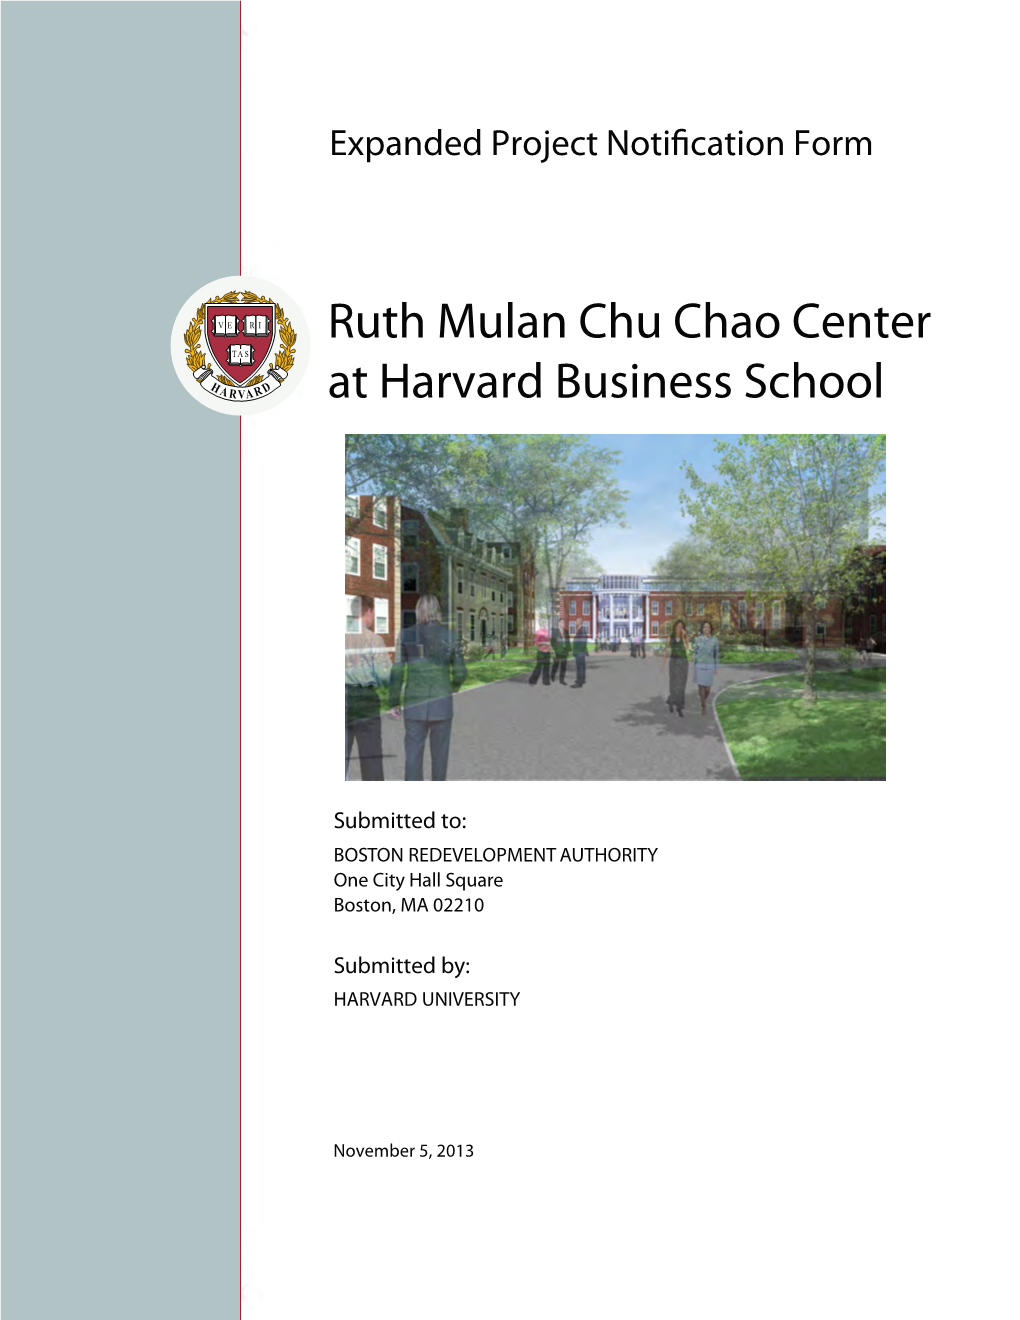 Ruth Mulan Chu Chao Center at Harvard Business School